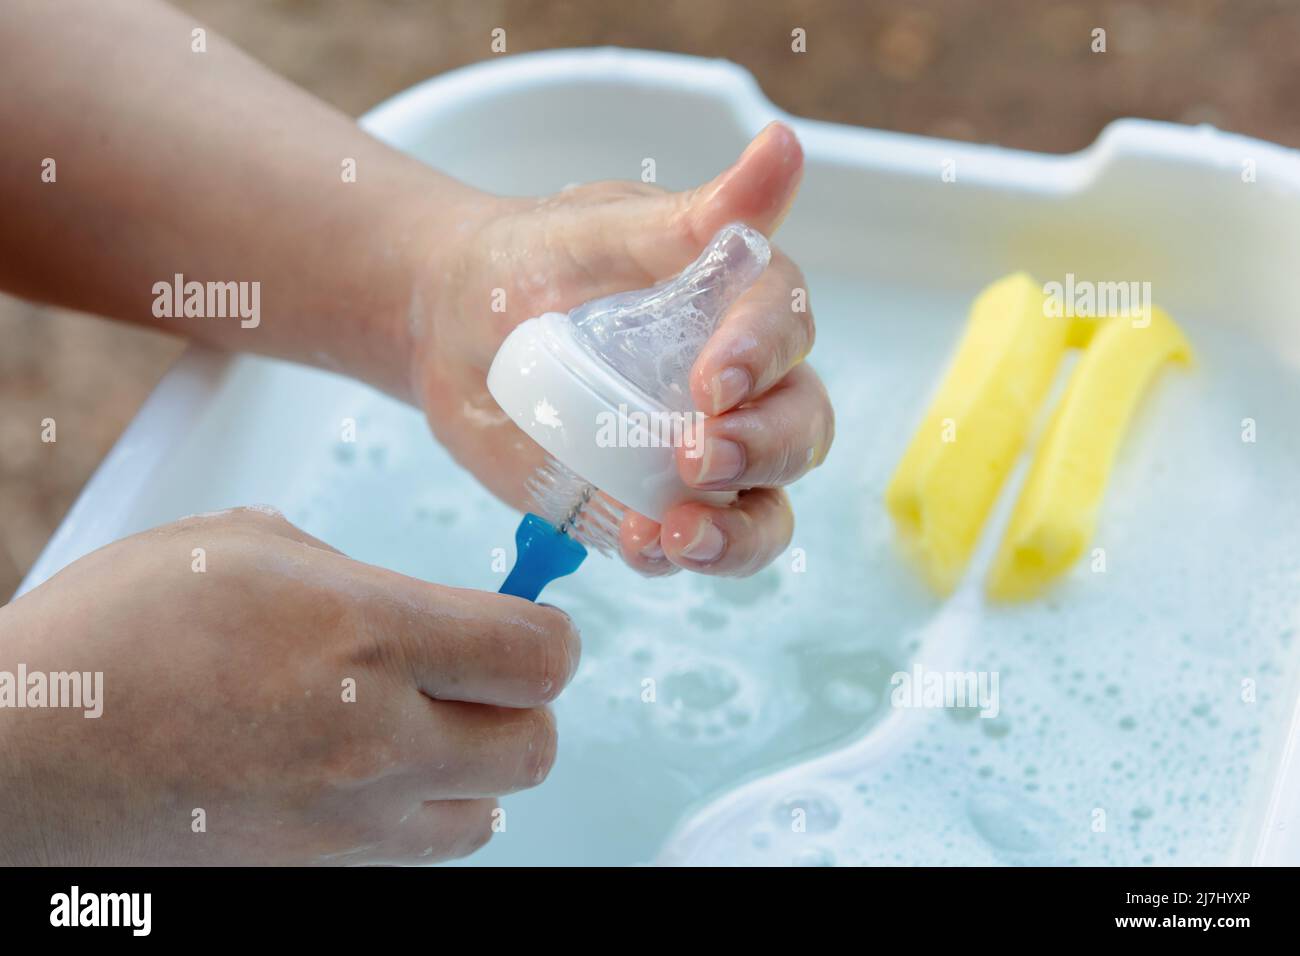 https://c8.alamy.com/comp/2J7HYXP/washing-baby-nipples-mothers-hand-washing-the-baby-nipples-2J7HYXP.jpg